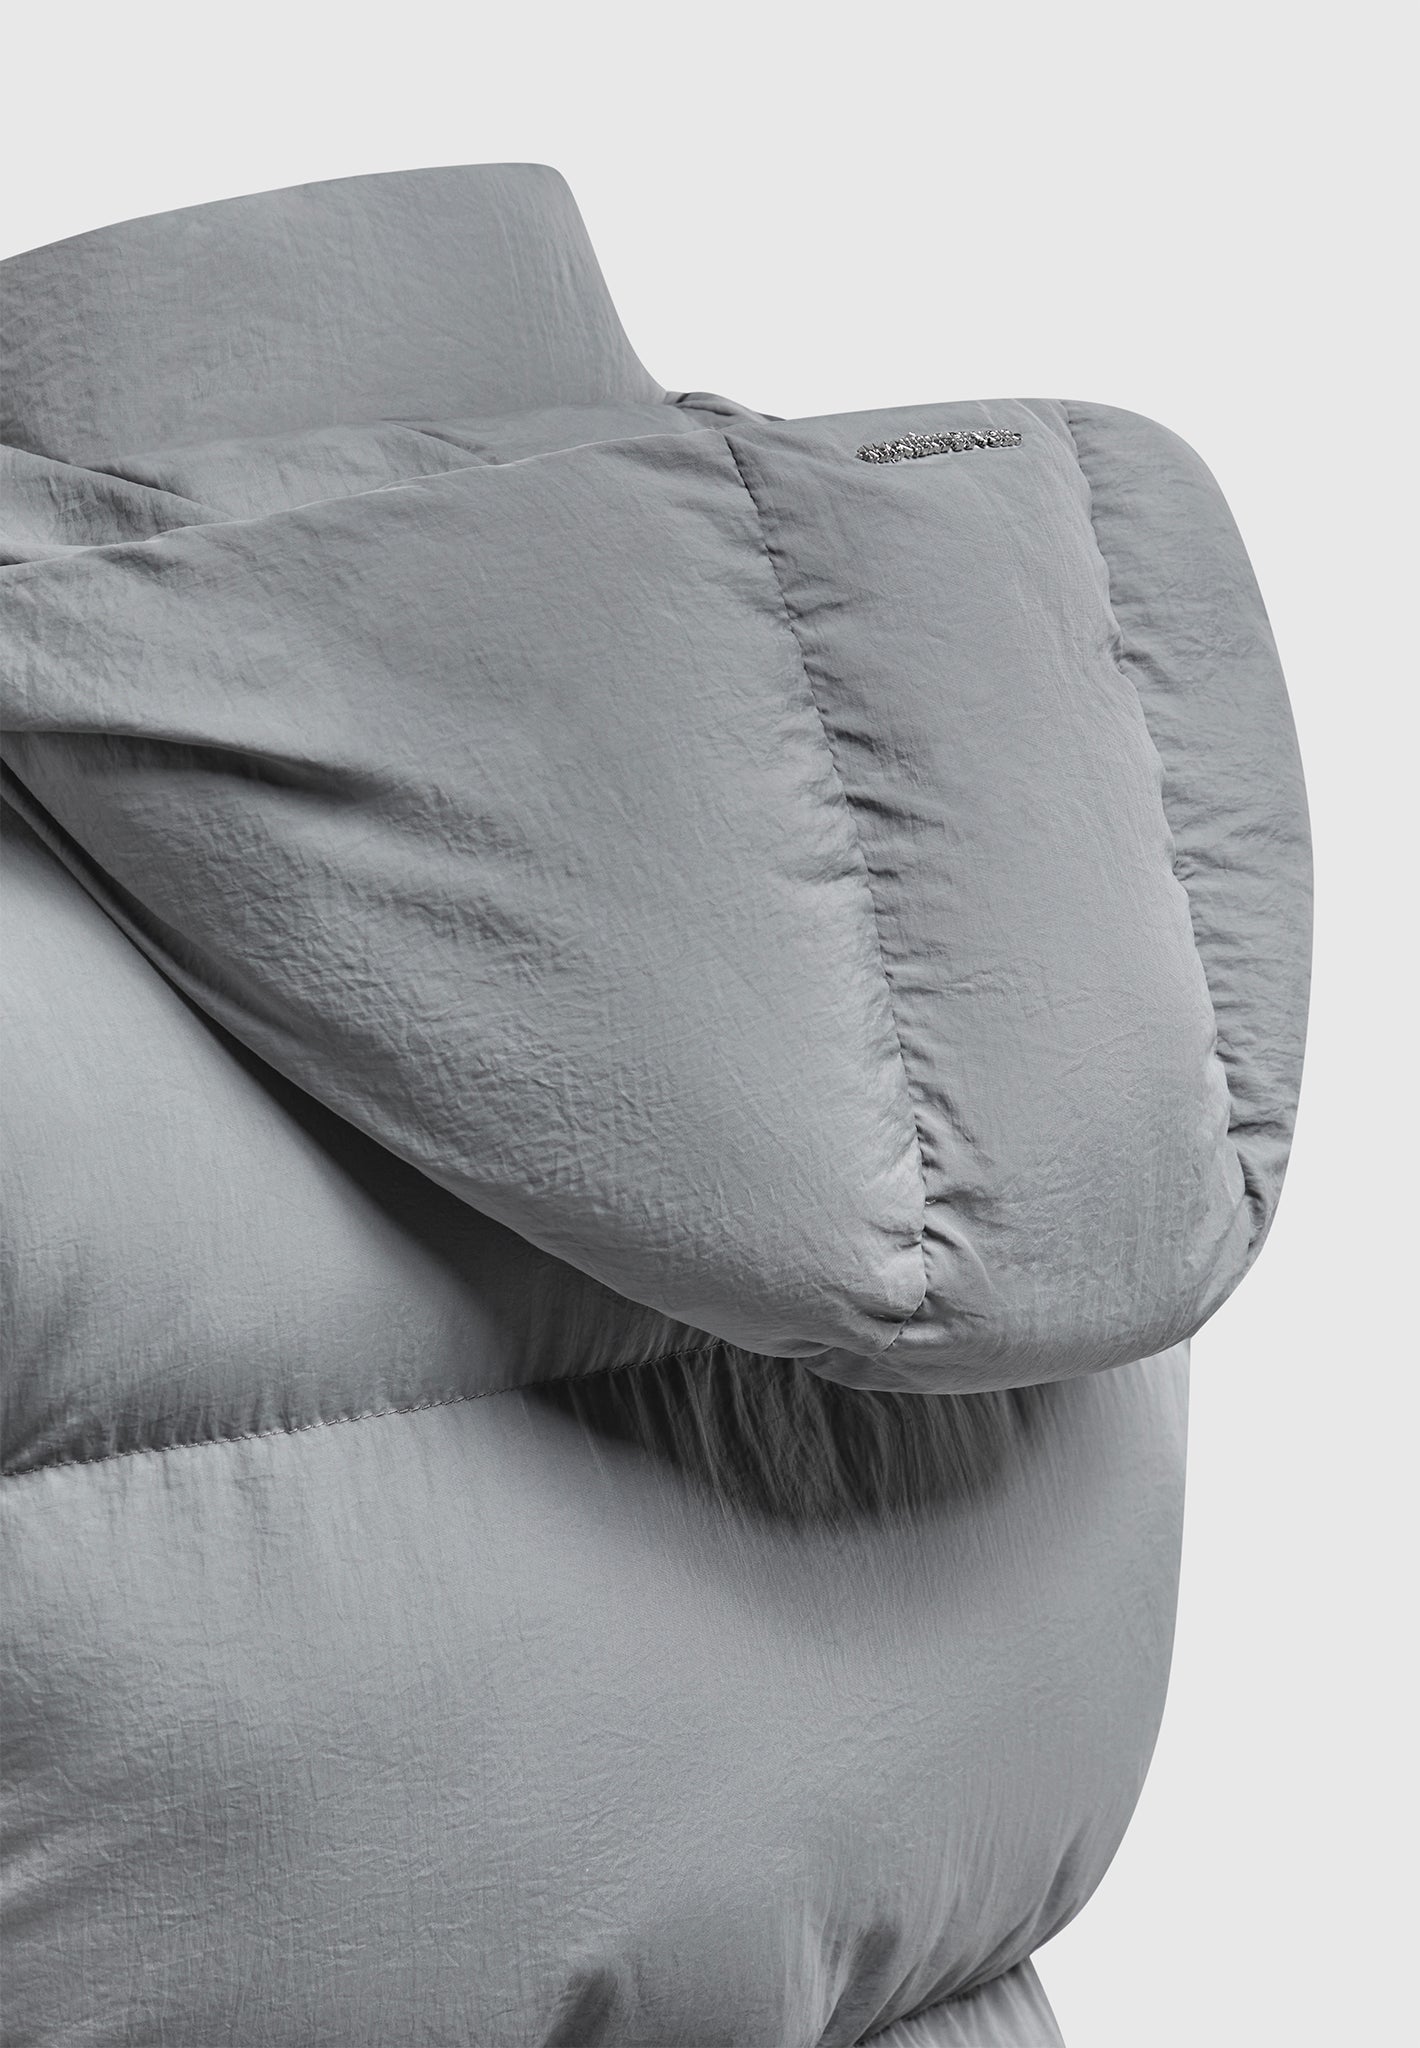 Louis Vuitton Long Pillow Puffer Wrap Coat, Black, 38